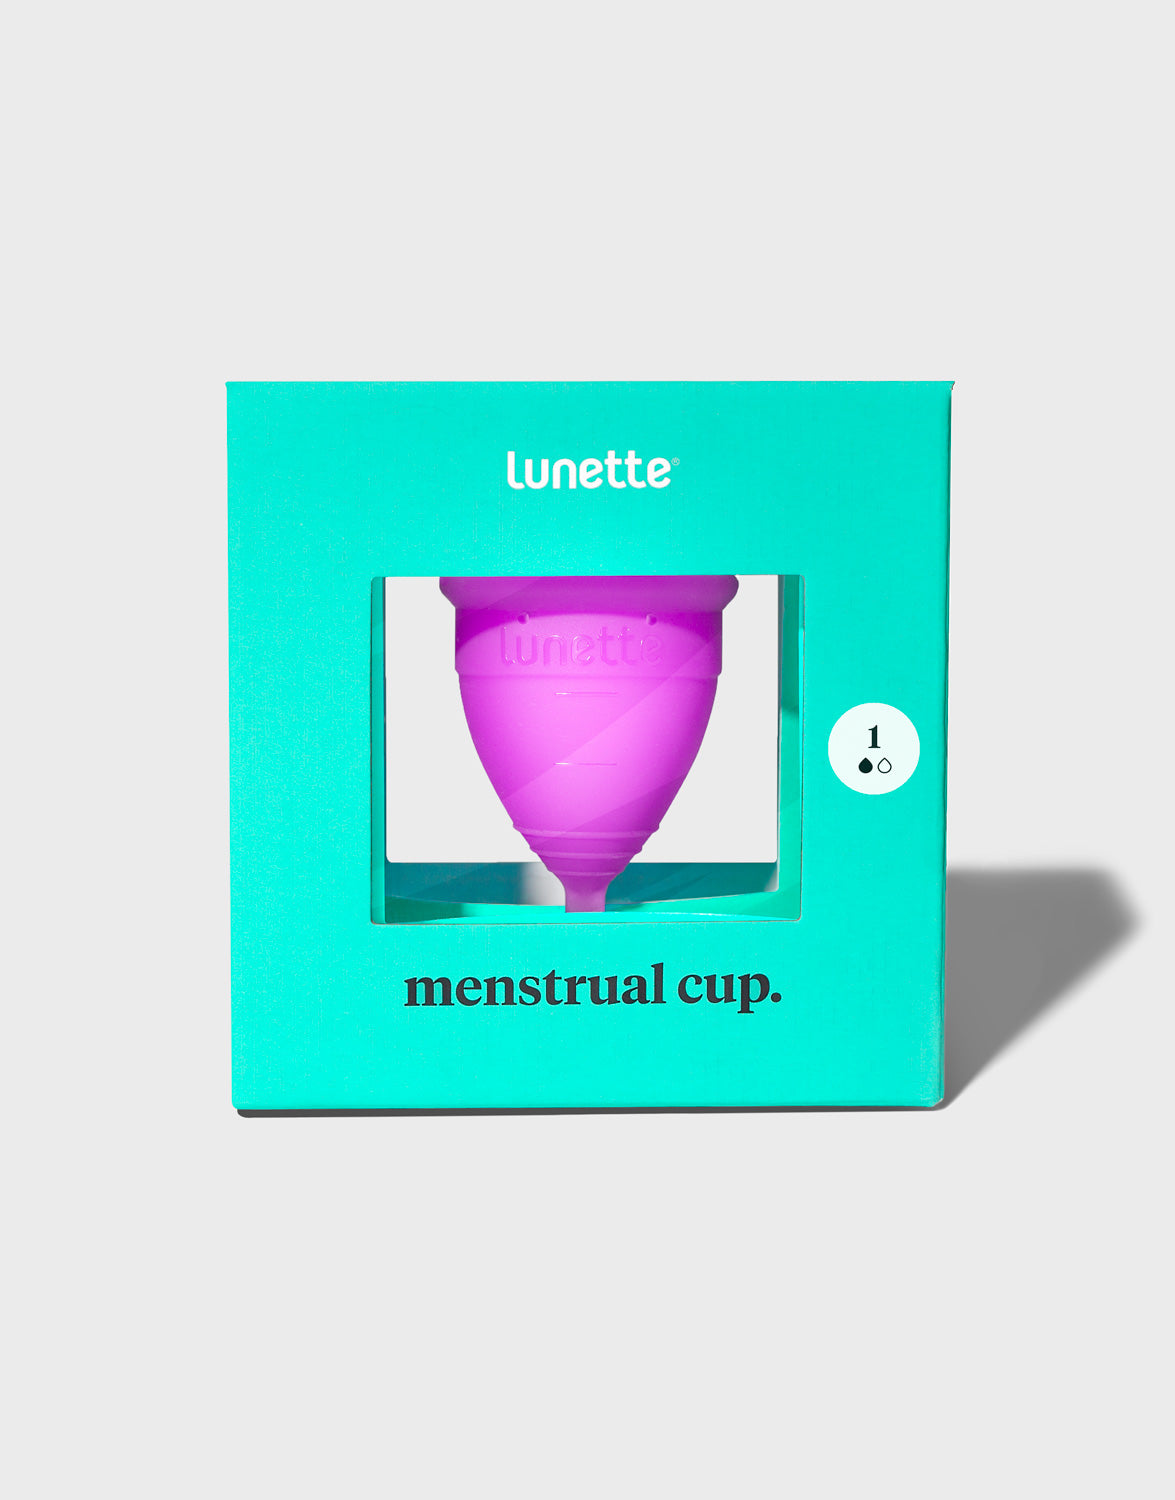 Lunette menstrual cup.